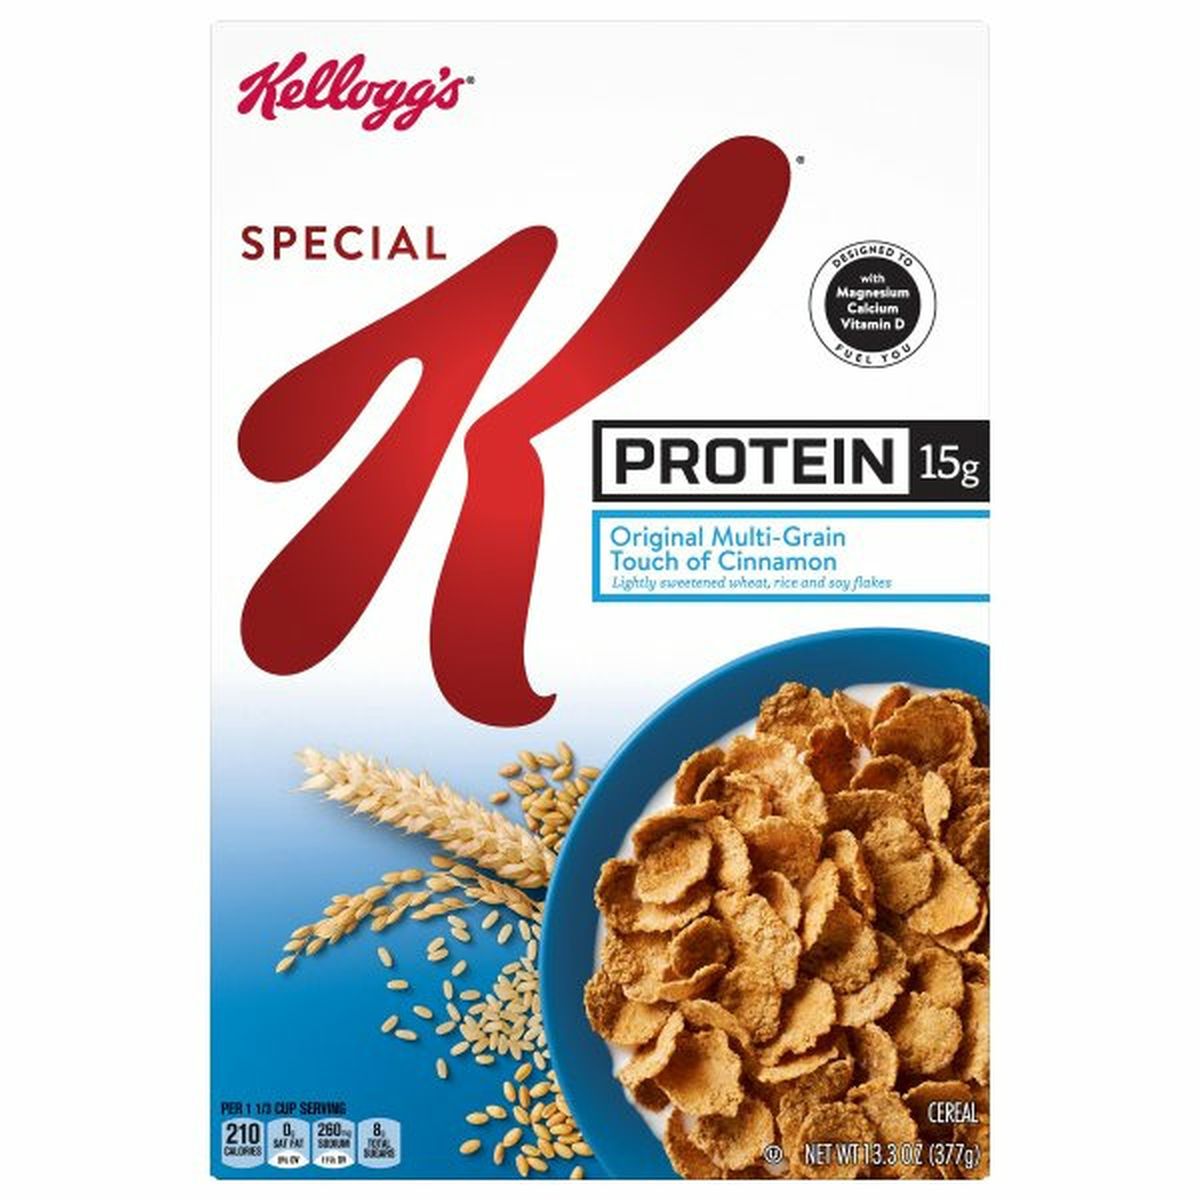 Calories in Kellogg's Special K Protein Cereal, Original Multi-Grain Touch of Cinnamon